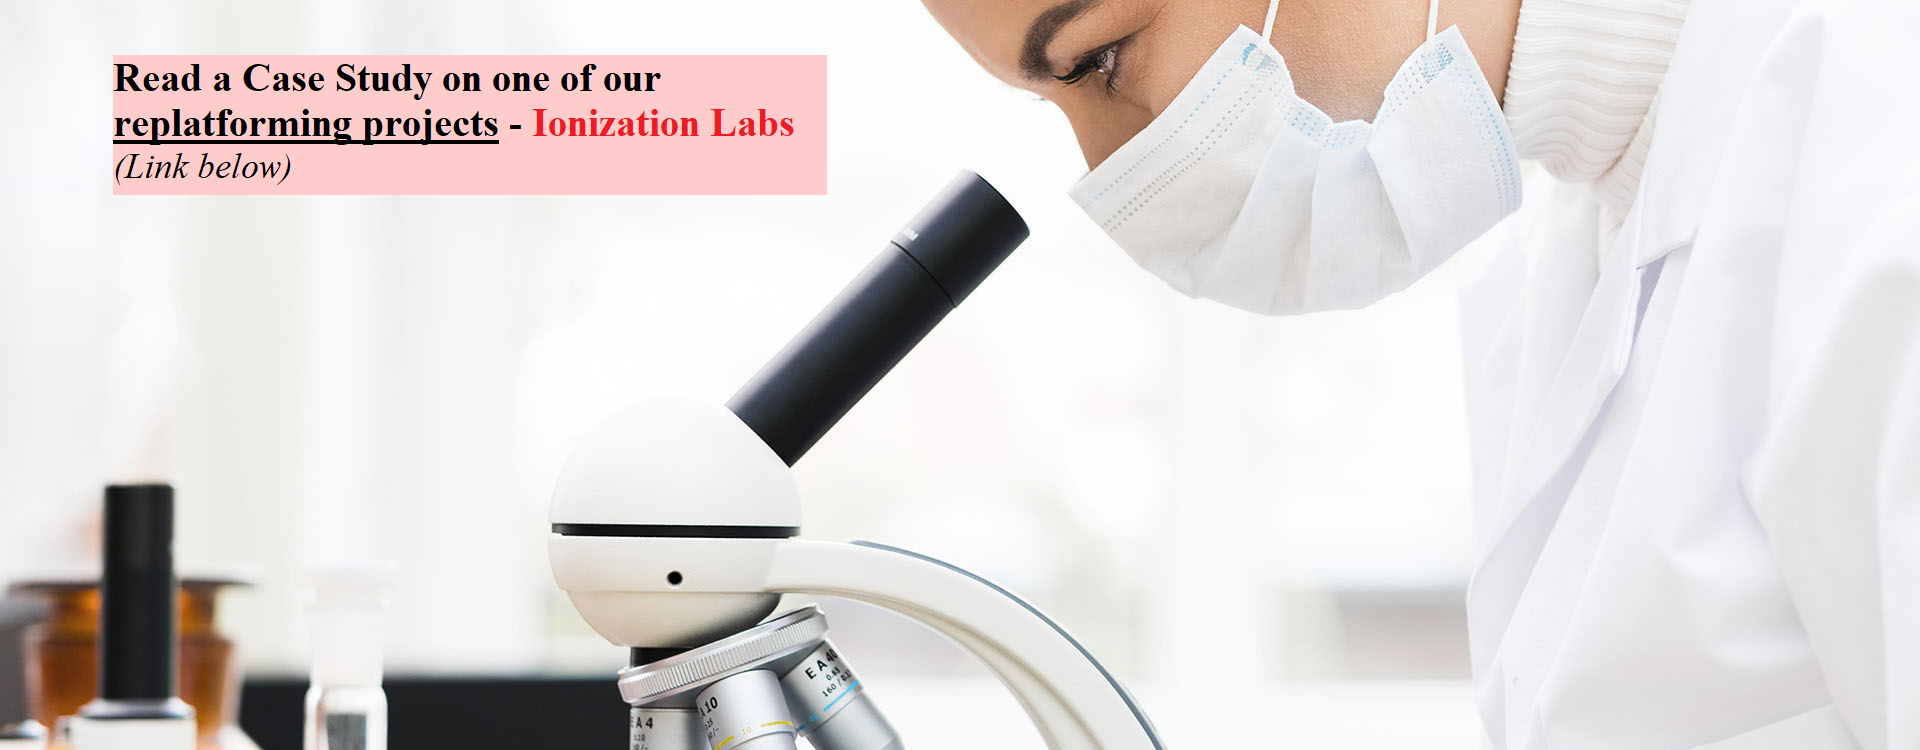 Ionization Labs case study